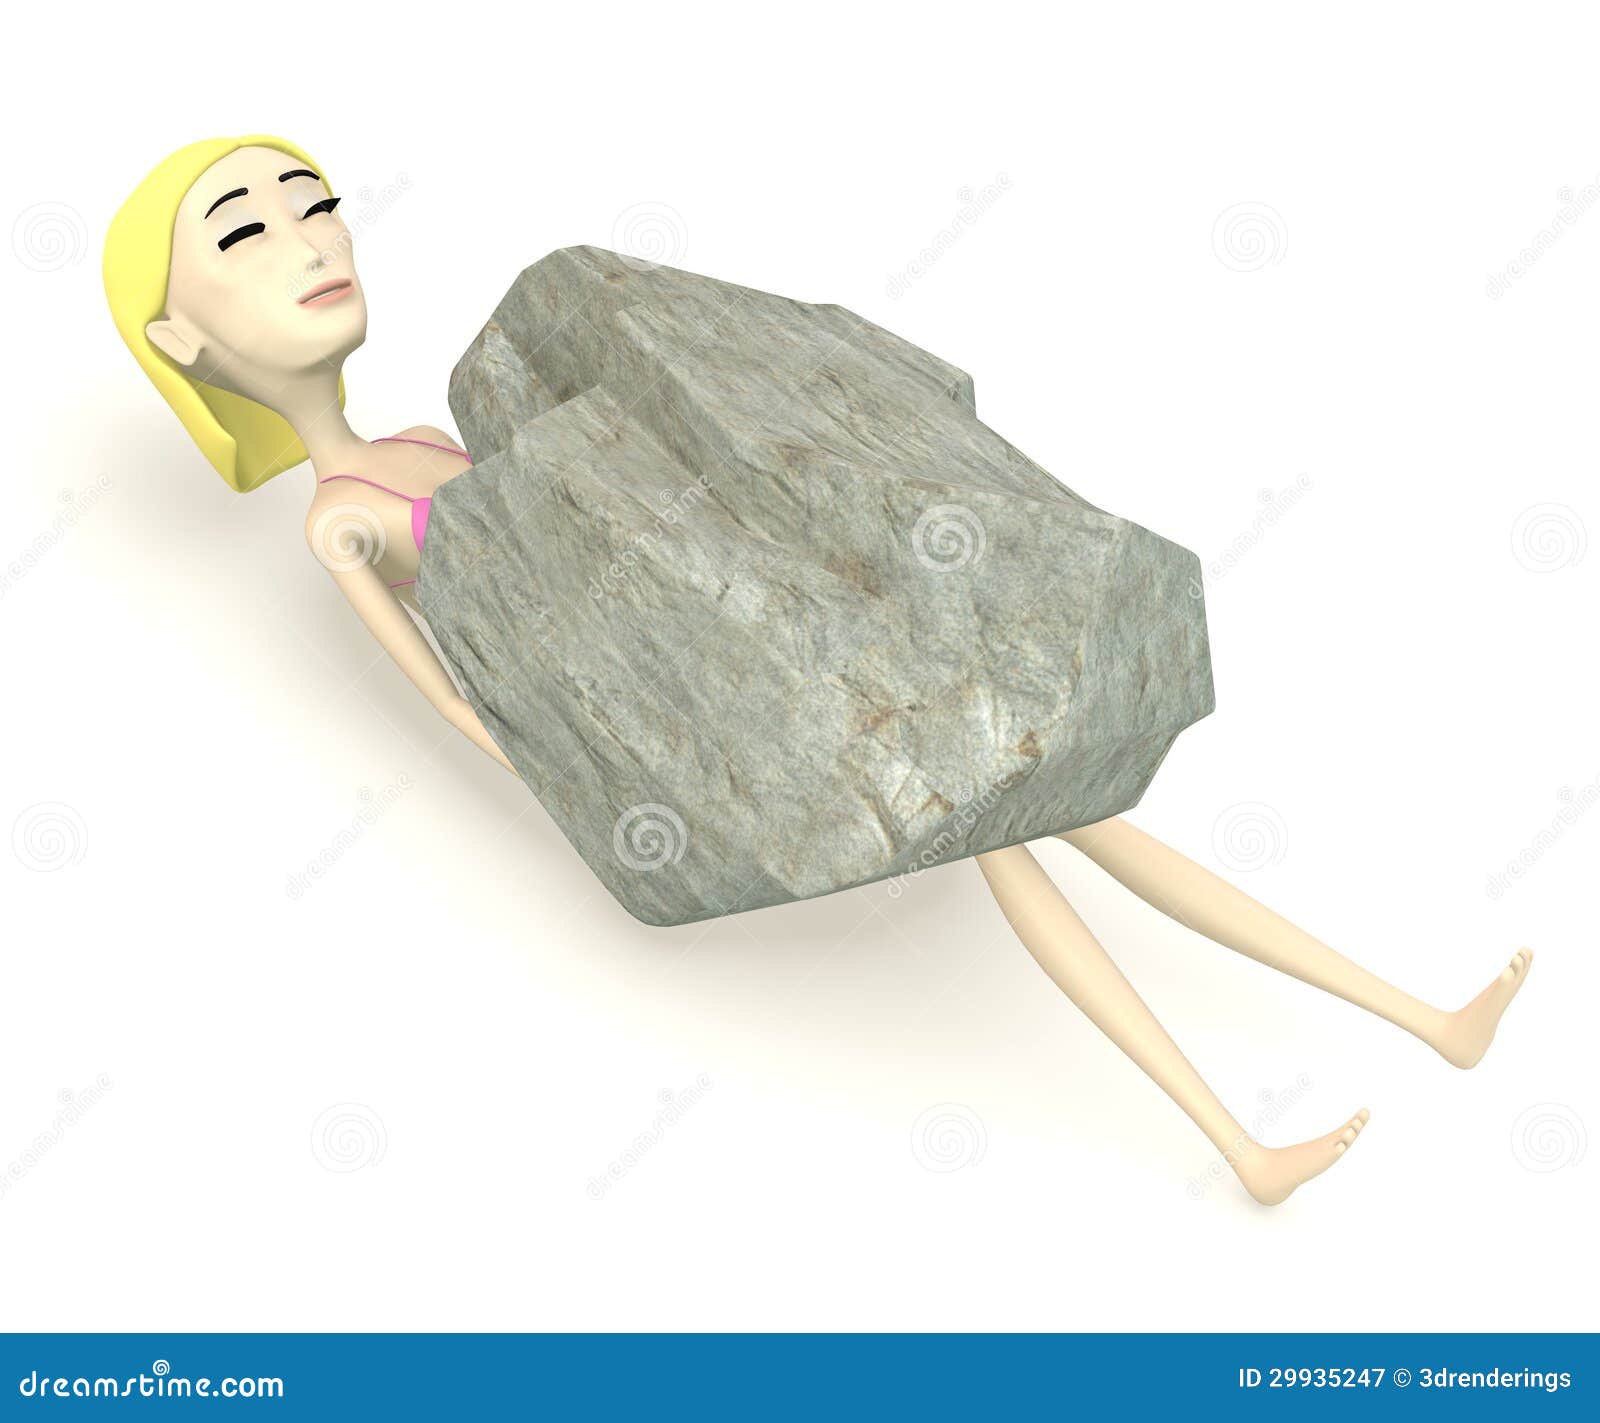 d-render-cartoon-girl-dead-under-stone-29935247.jpg